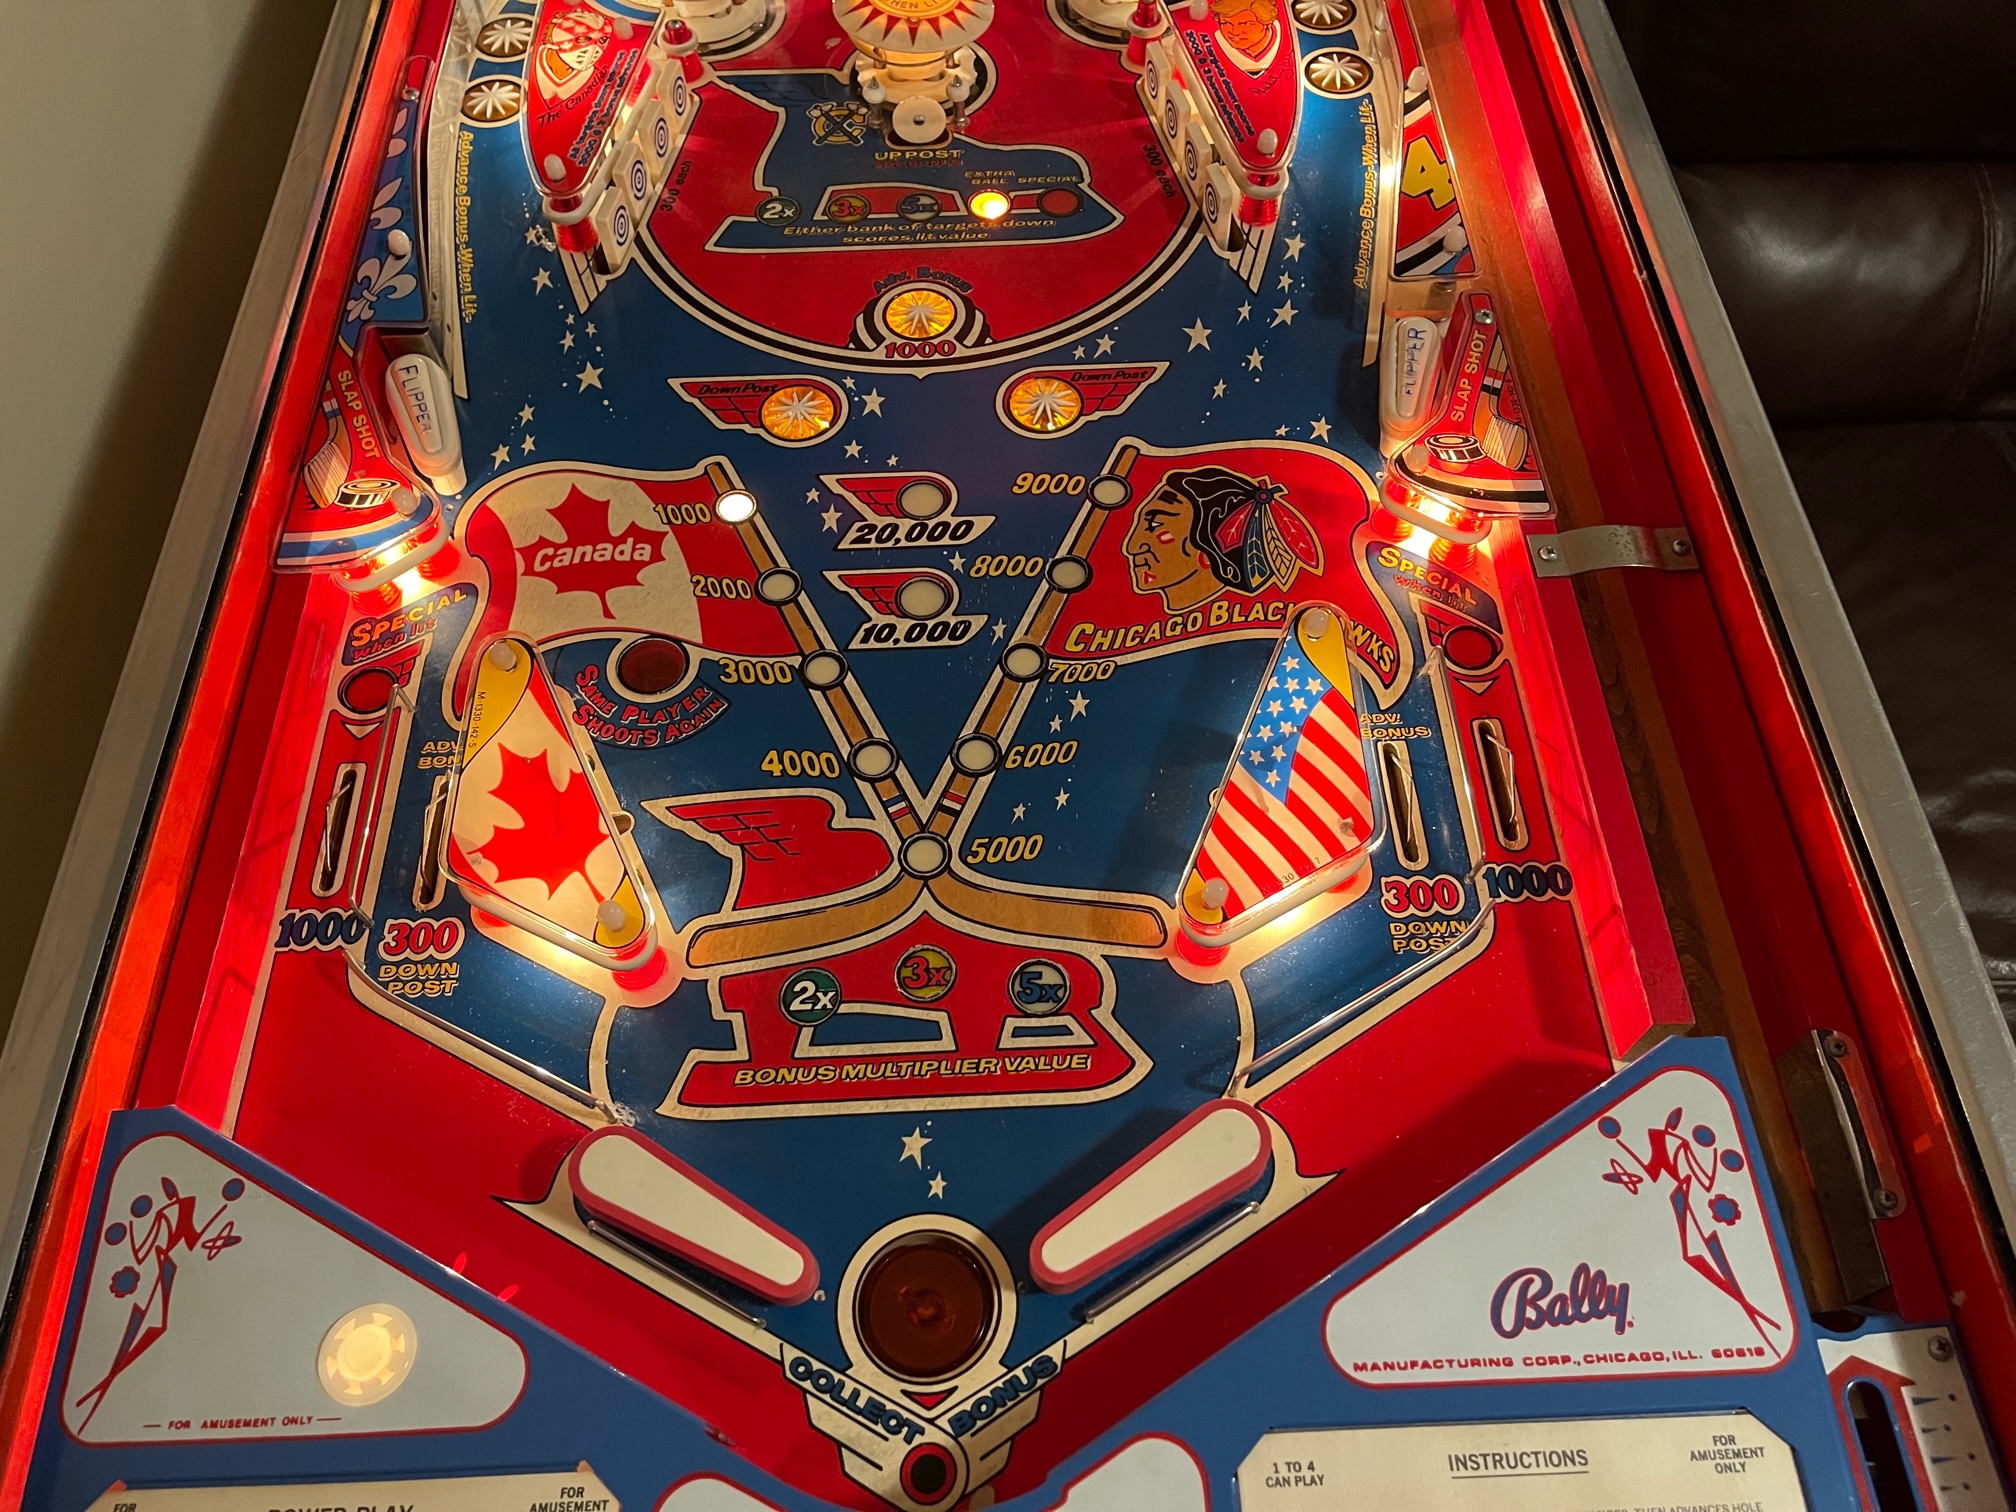 Bobby Orr  On A Pinball Machine  In A Blackhawks Uniform